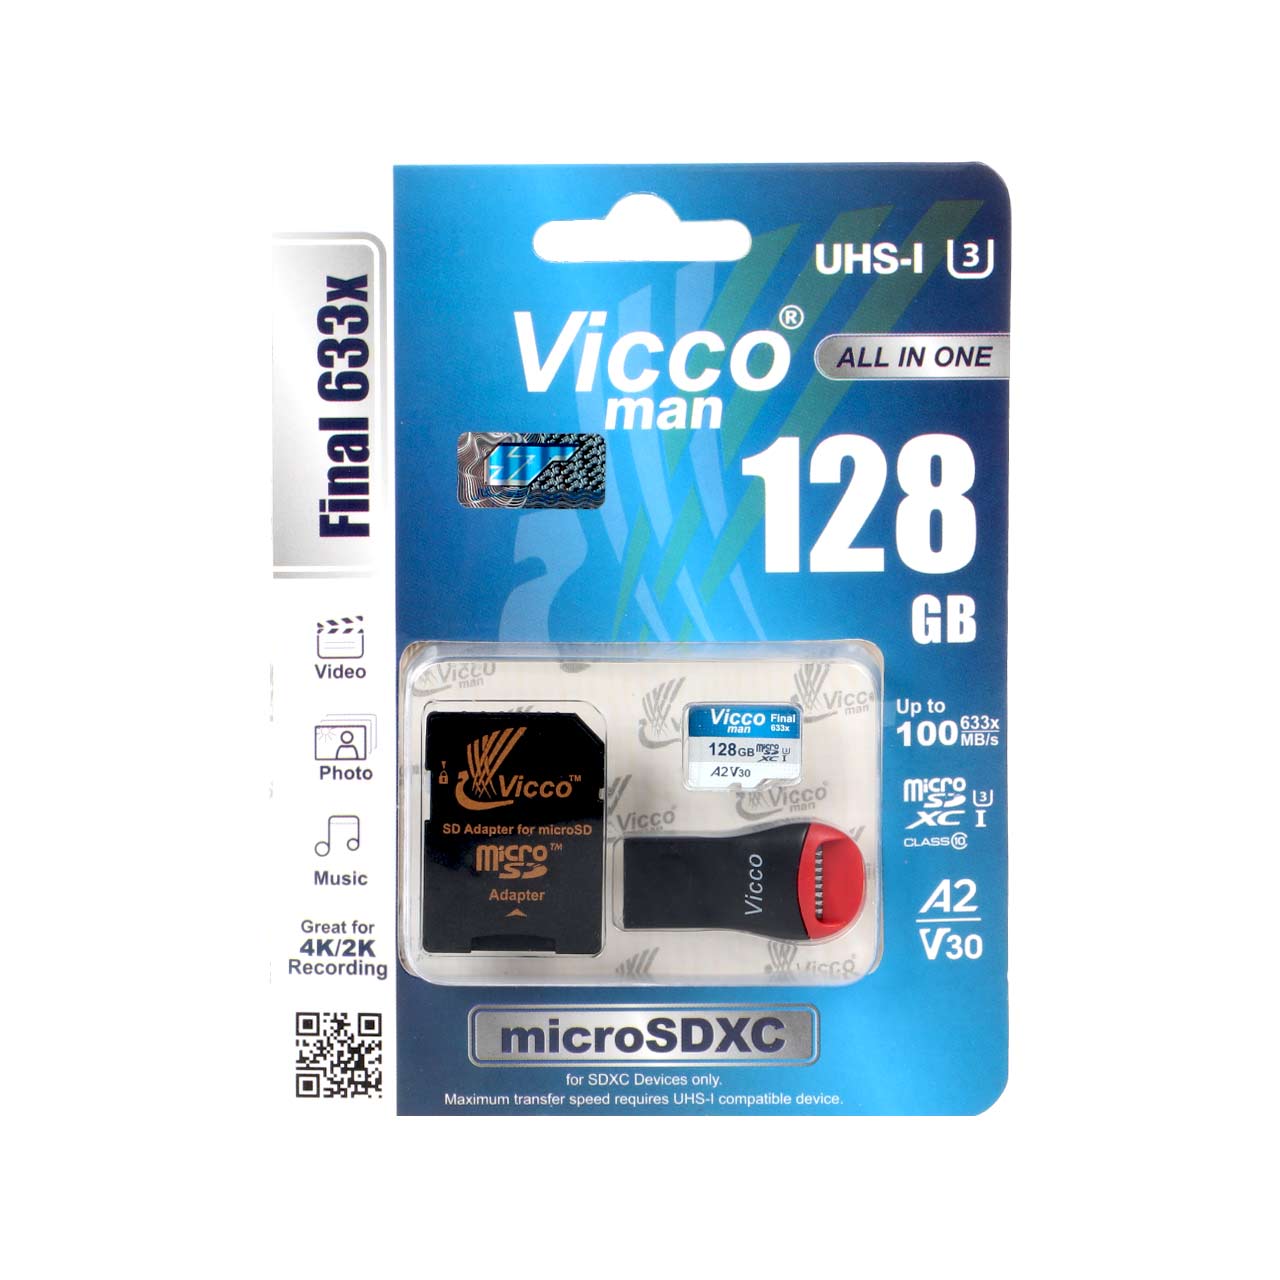 Vicco man Final 633X ALL IN ONE U3 microSDXC UHS-I Class10-100MB/s -128GB